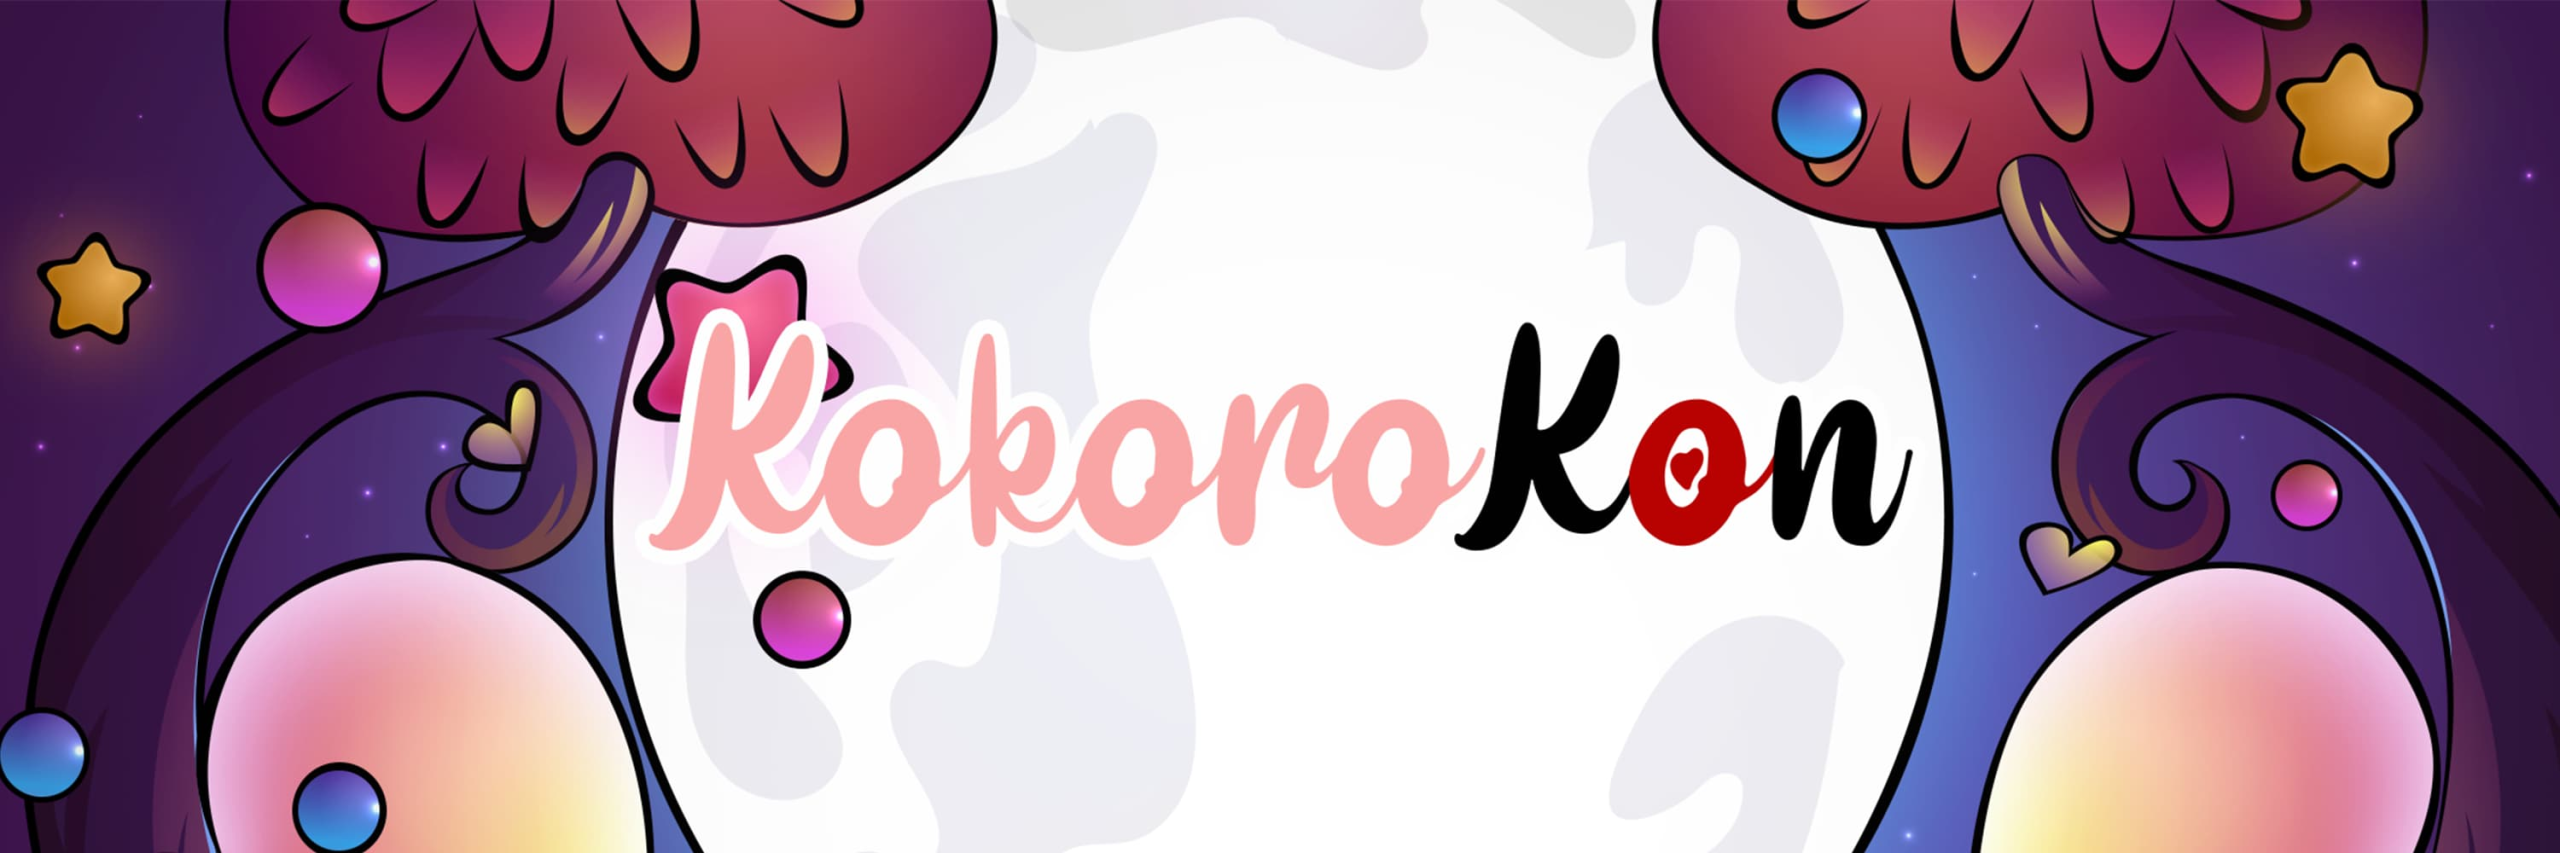 KokoroKon- Banner